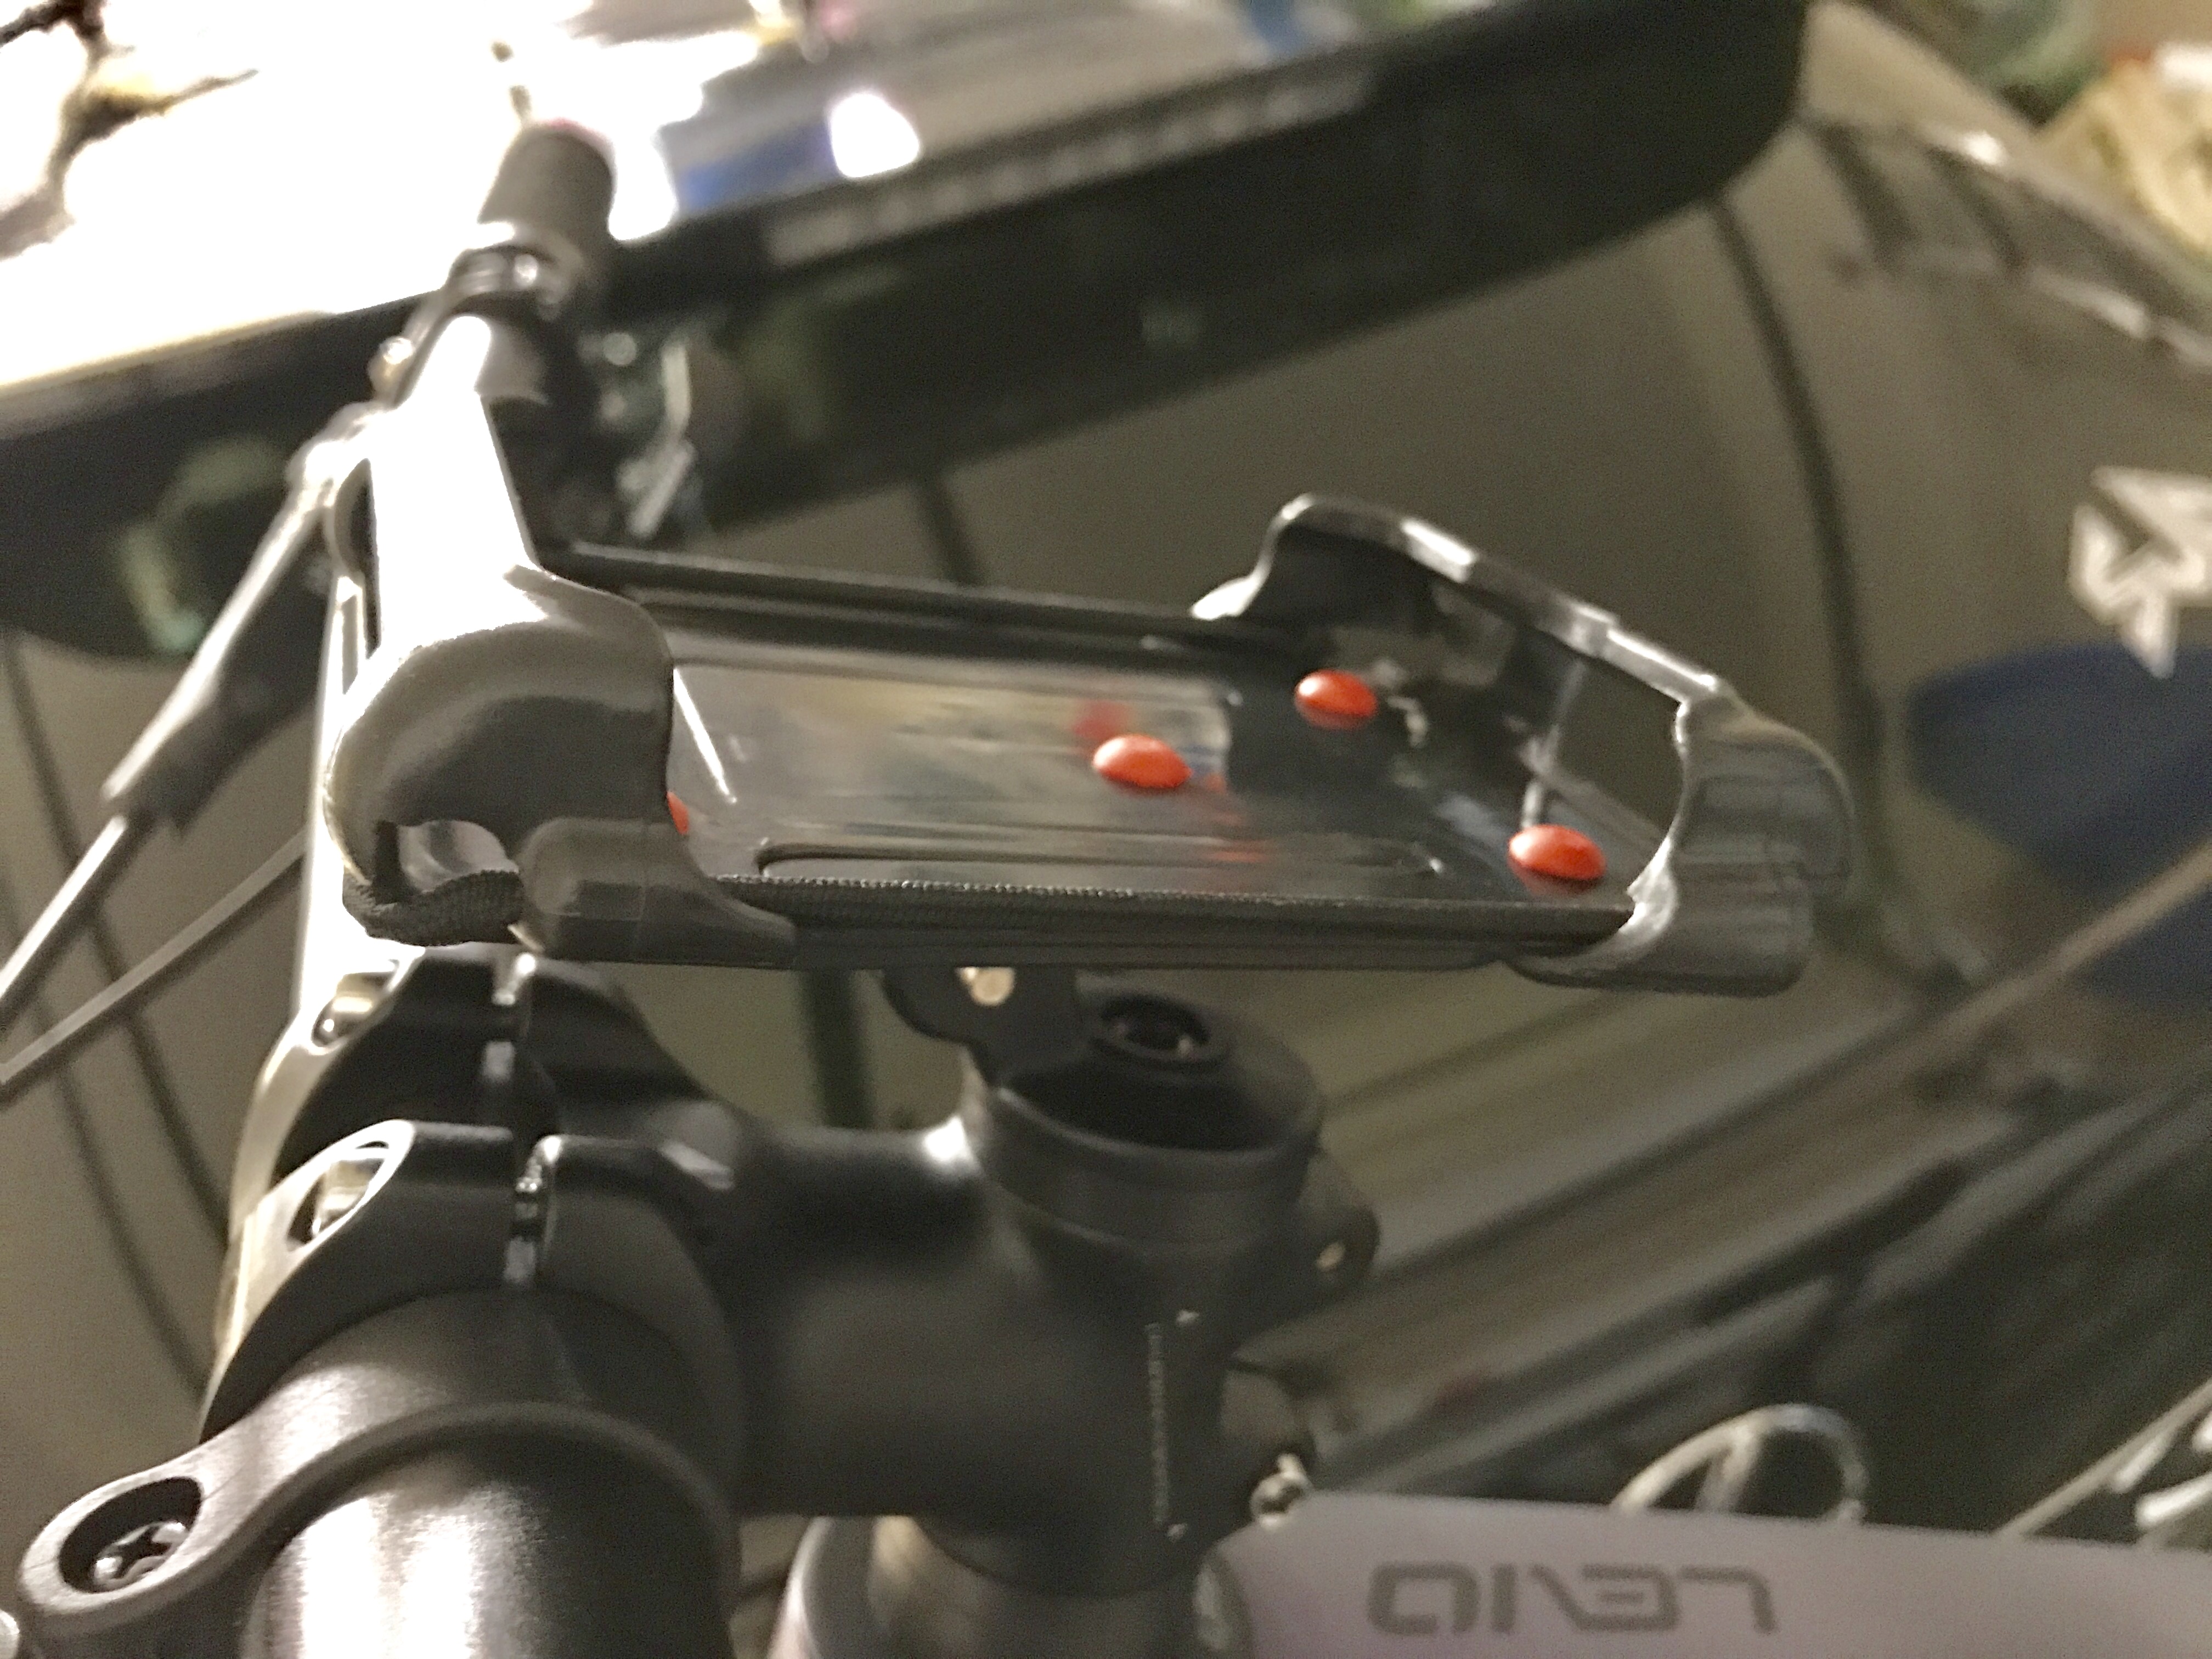 specialized bike phone holder